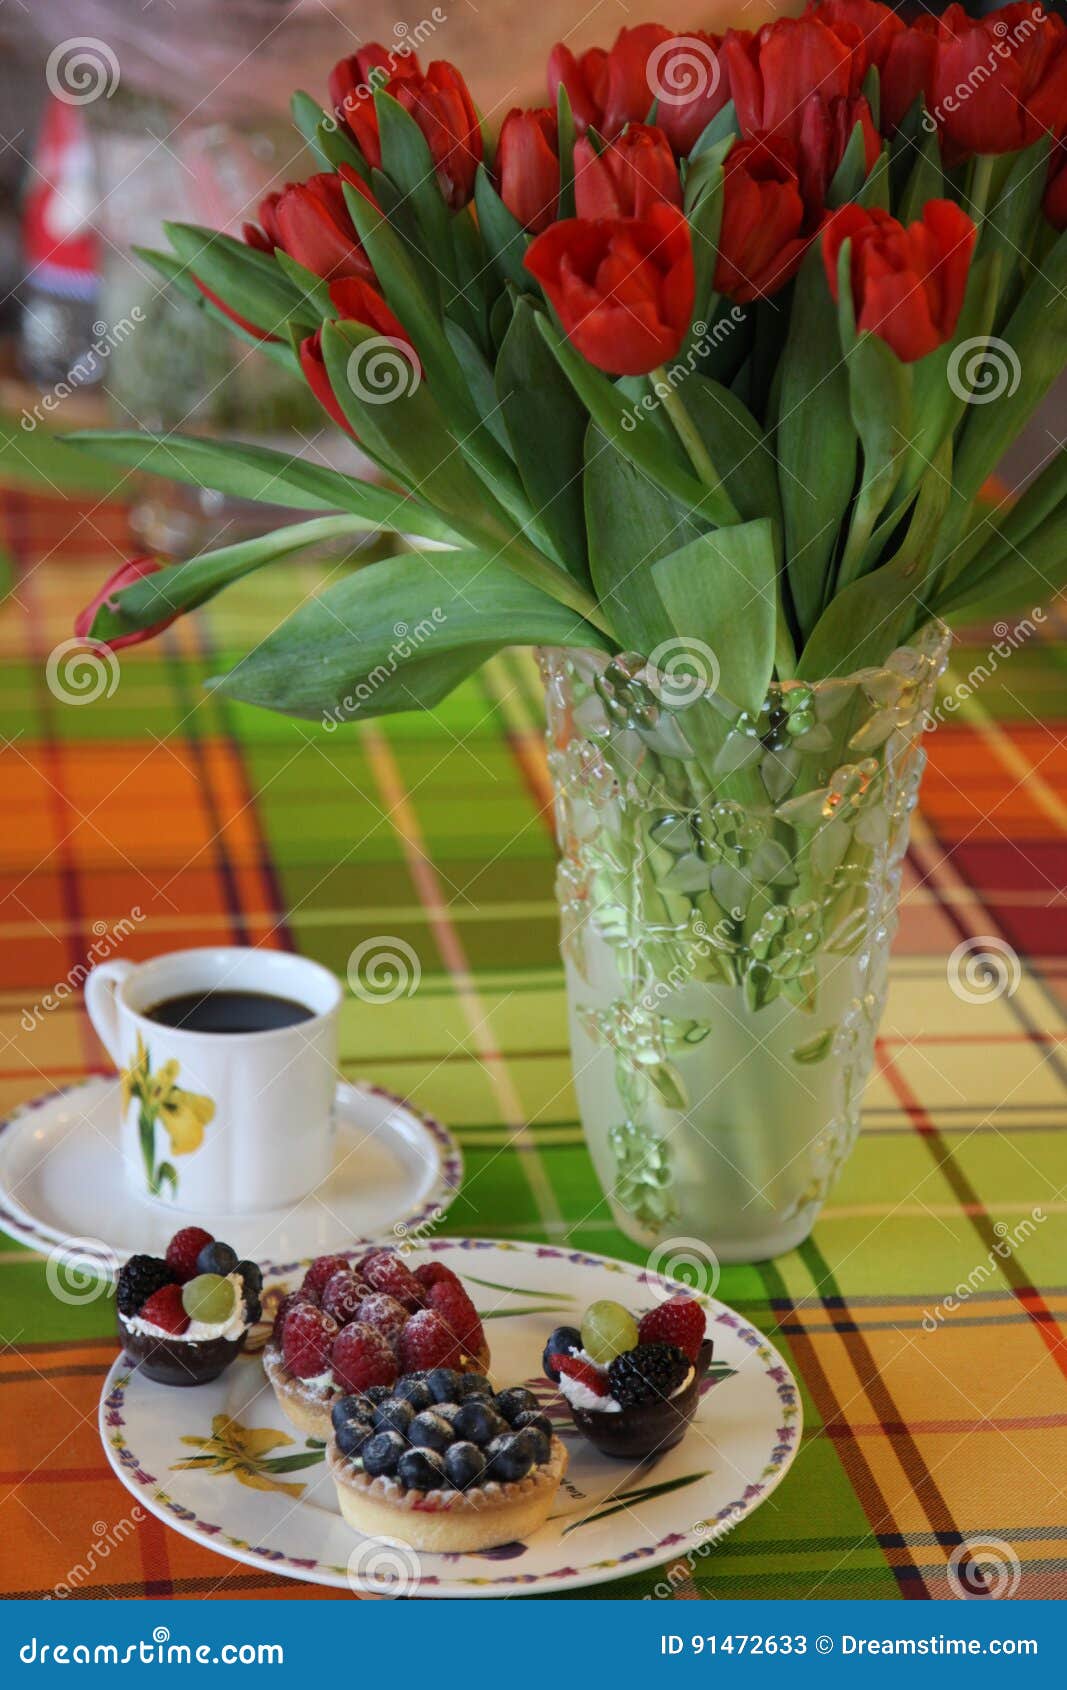 red tulips cakes tartas coffee breakfast